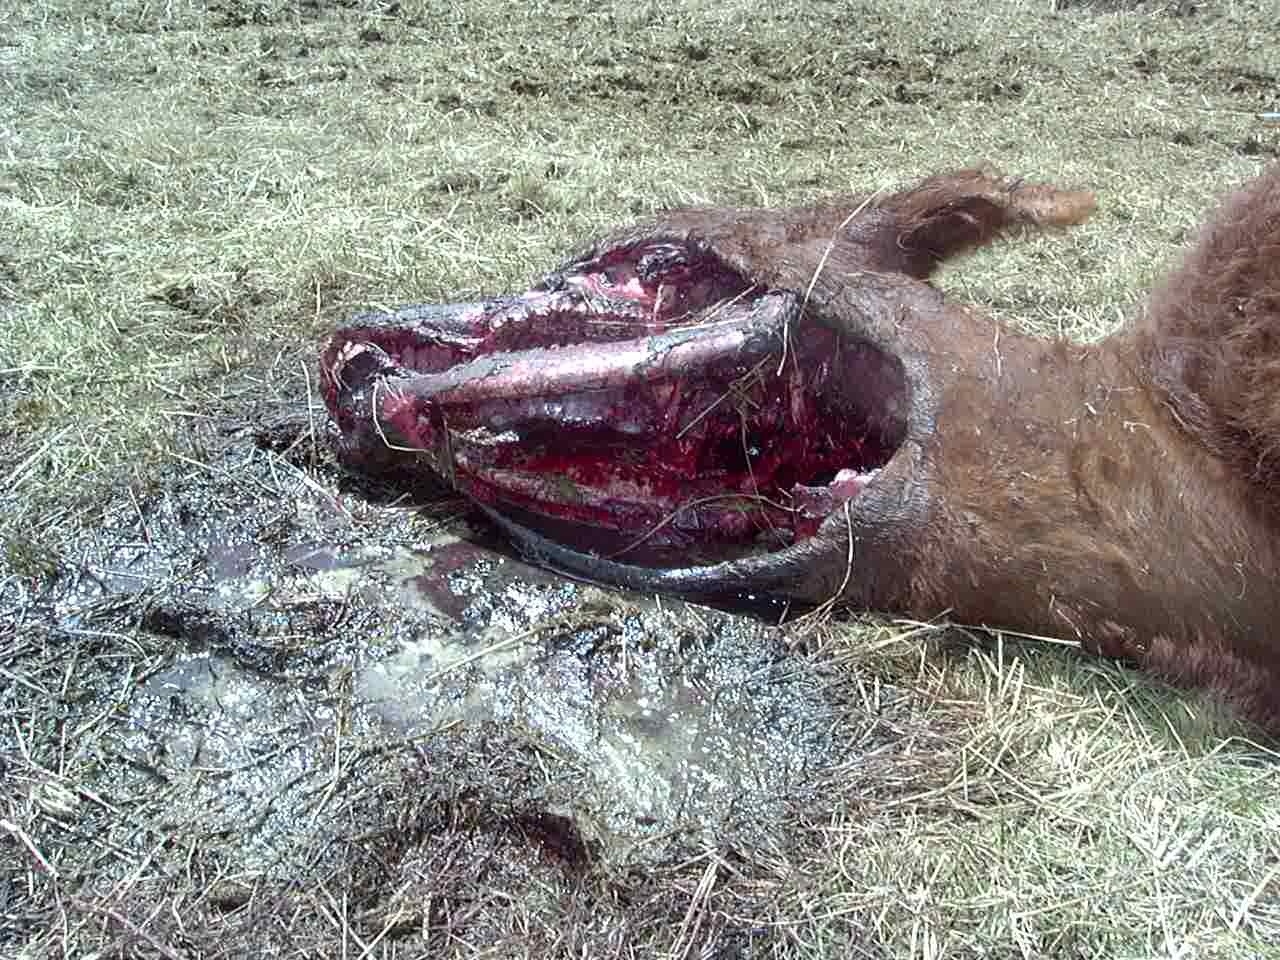 Cattle Mutilations